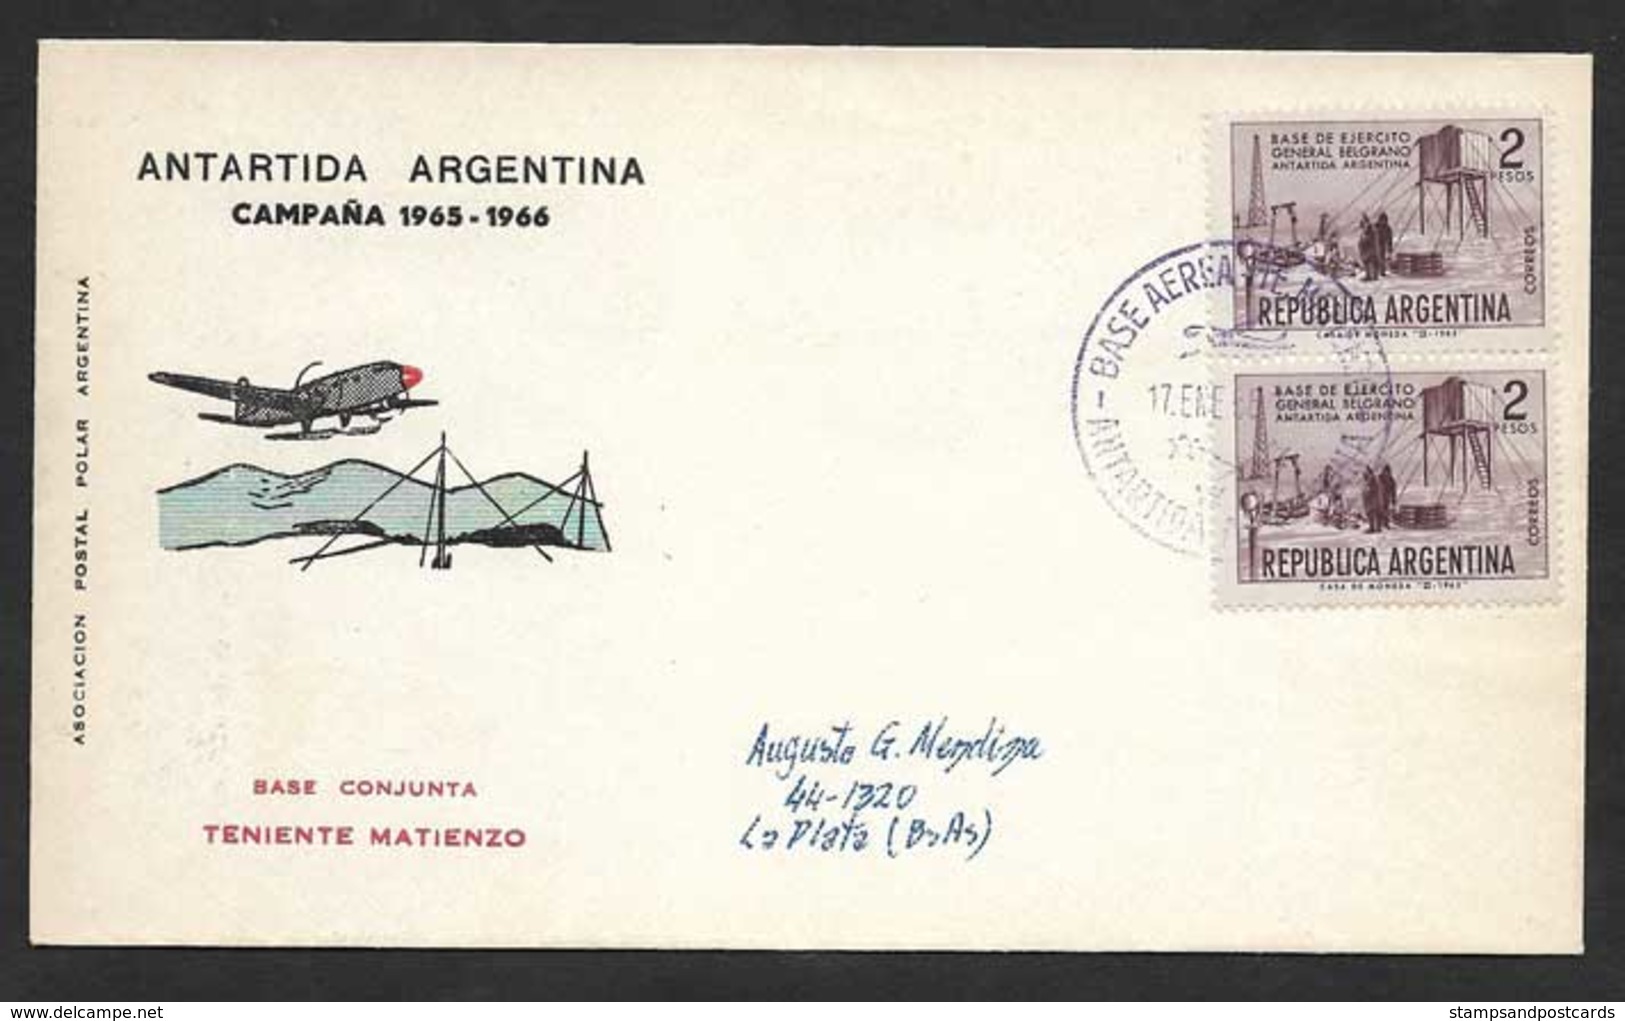 Argentine Base Aerienne Teniente Matienzo Antarctique 1966 Argentina Antartic Aerial Base - Vols Polaires